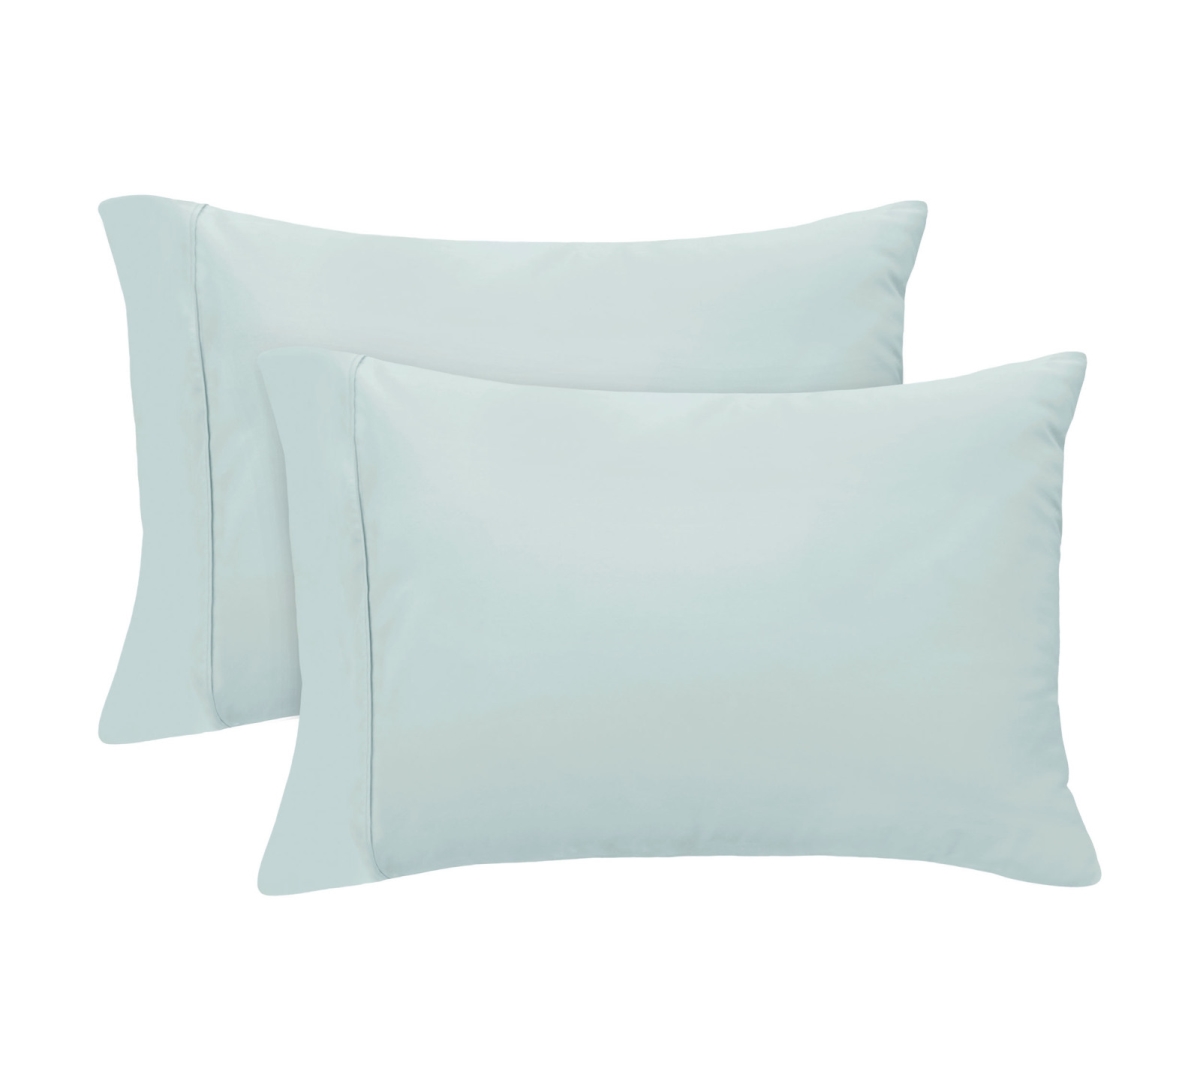 Yms008203 Luxury 620 Thread Count 100 Percent Cotton Pillowcase Set, Spa Blue - Standard - 2 Piece